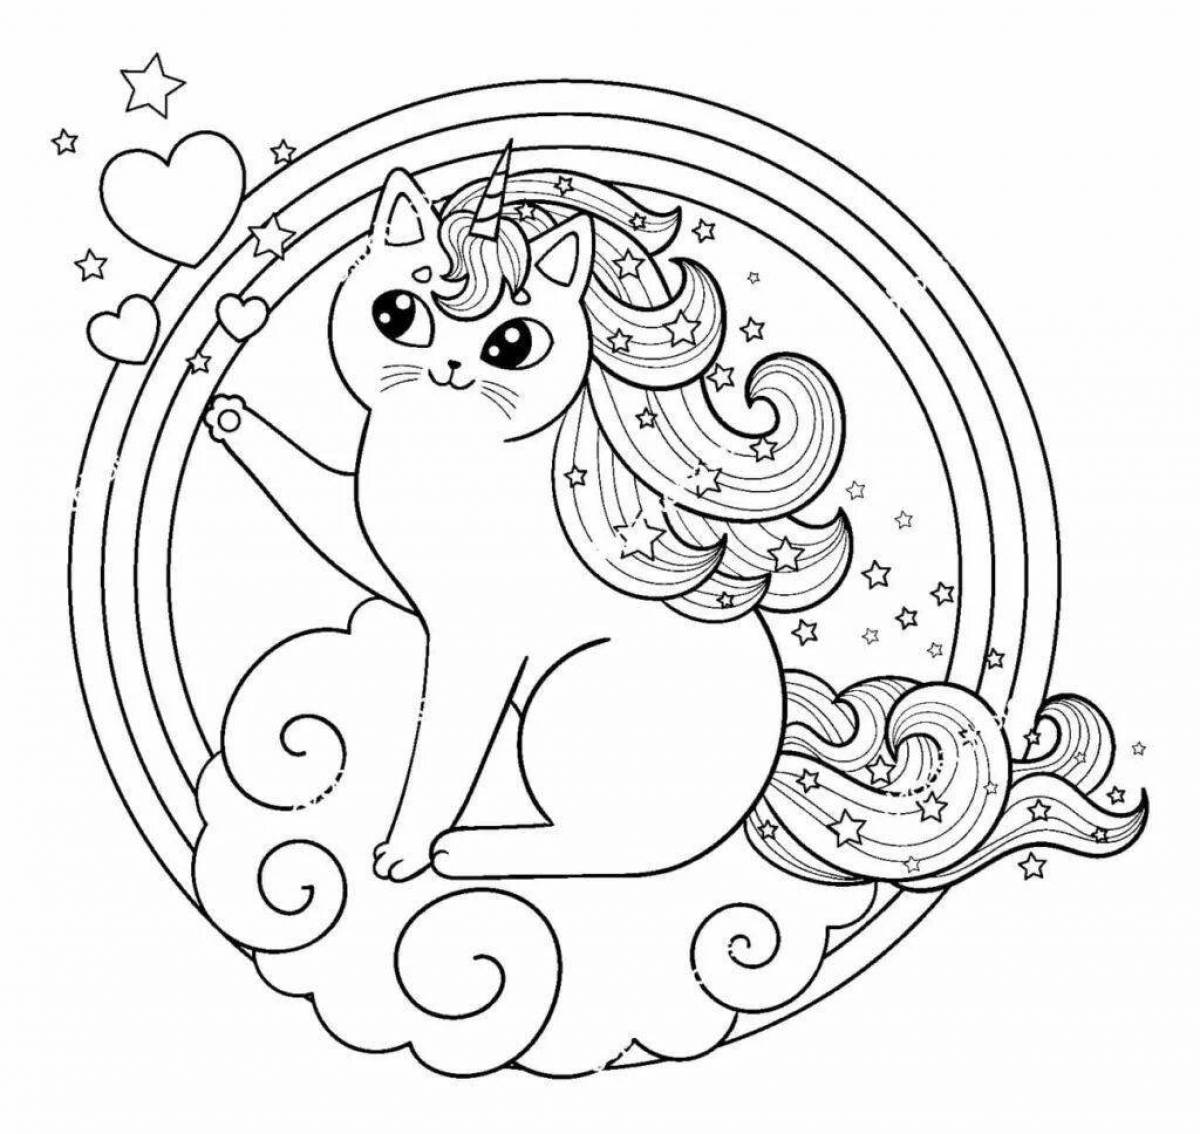 Charming unicorn kitten coloring book